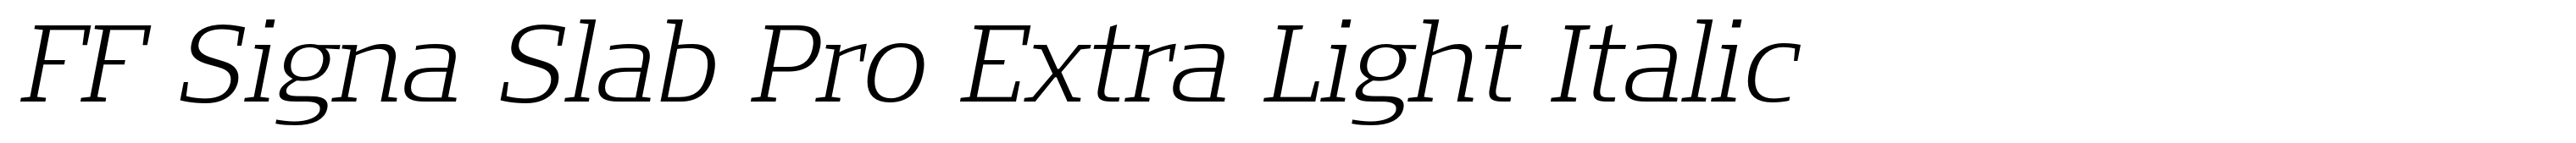 FF Signa Slab Pro Extra Light Italic